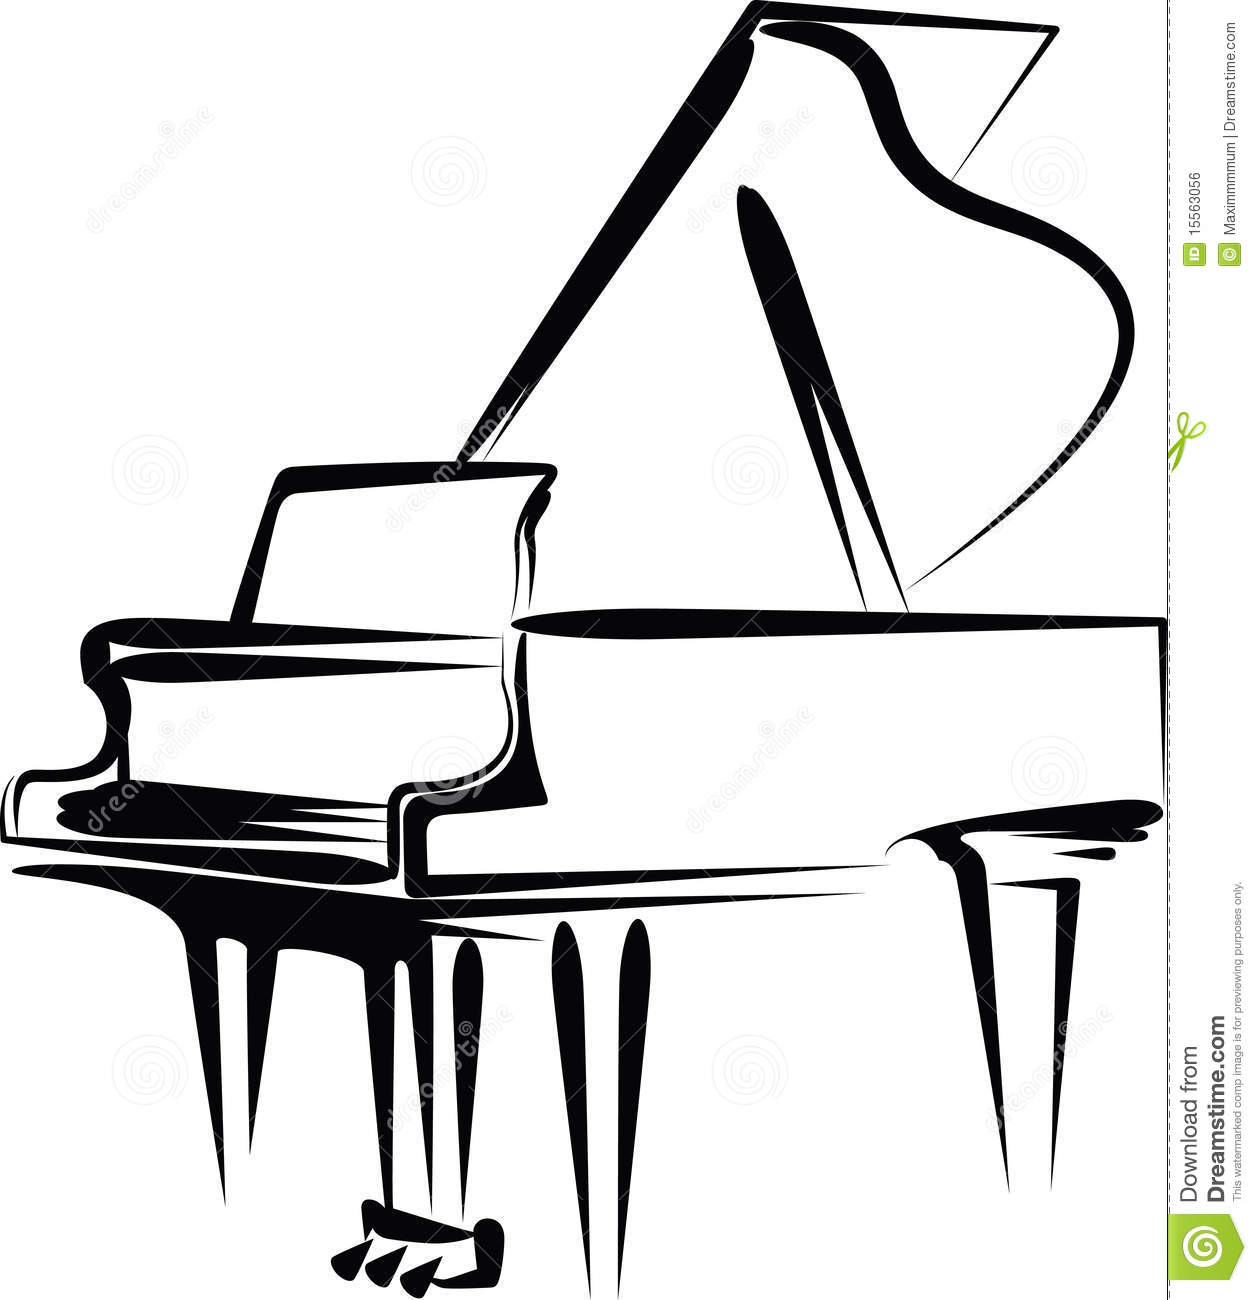 Piano Royalty Free Stock Image   Image  15563056